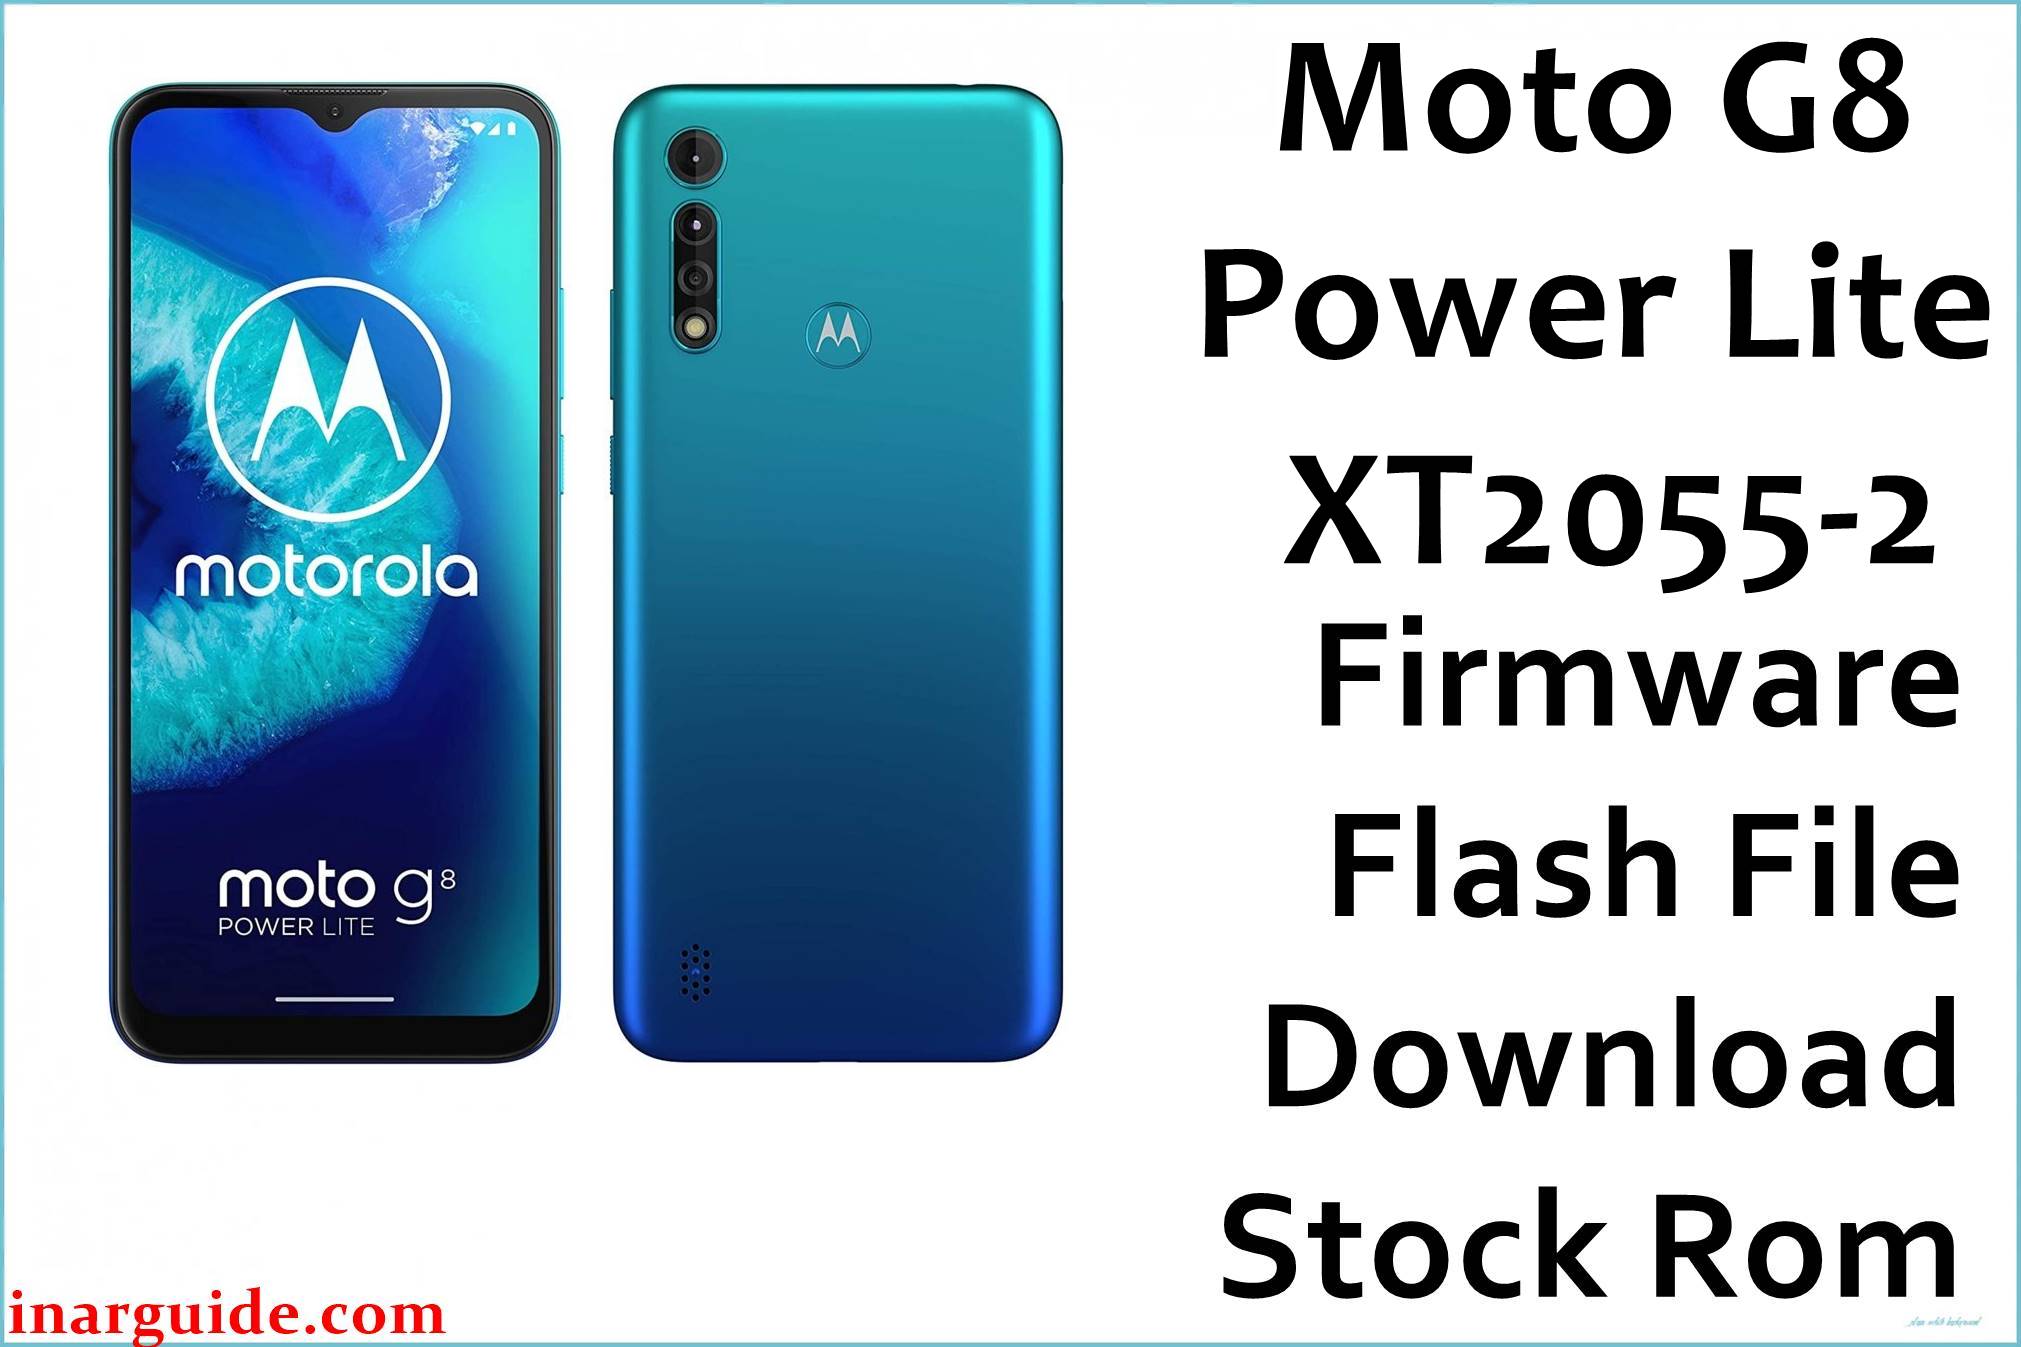 Motorola Moto G8 Power Lite XT2055-2